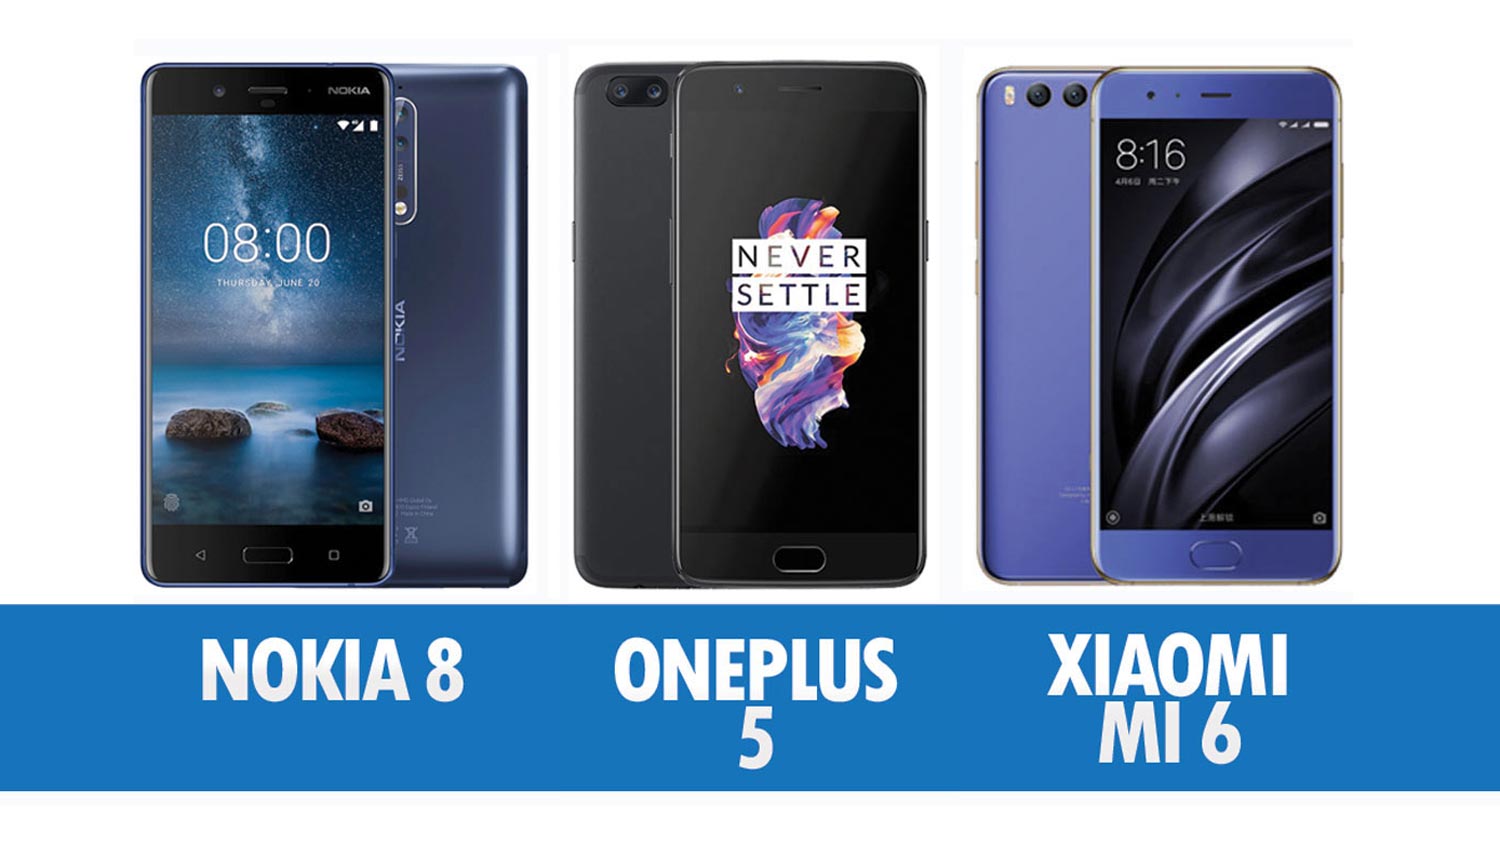 Peranti Mana Lebih Berbaloi? – Perbandingan Nokia 8, OnePlus 5 Dan Xiaomi Mi 6